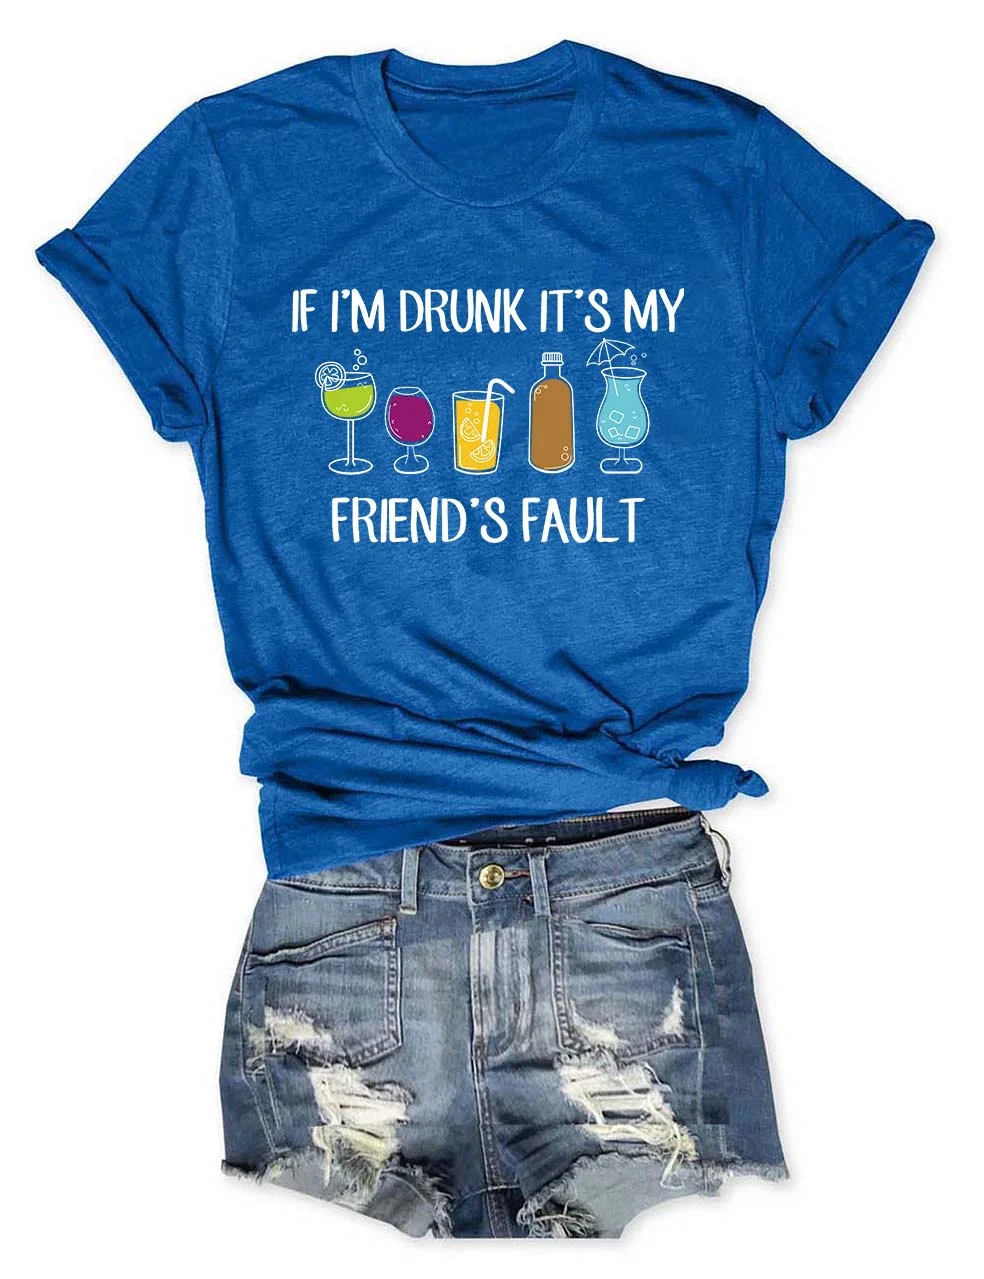 If I'm Drunk It's My Friend's Fault T-Shirt